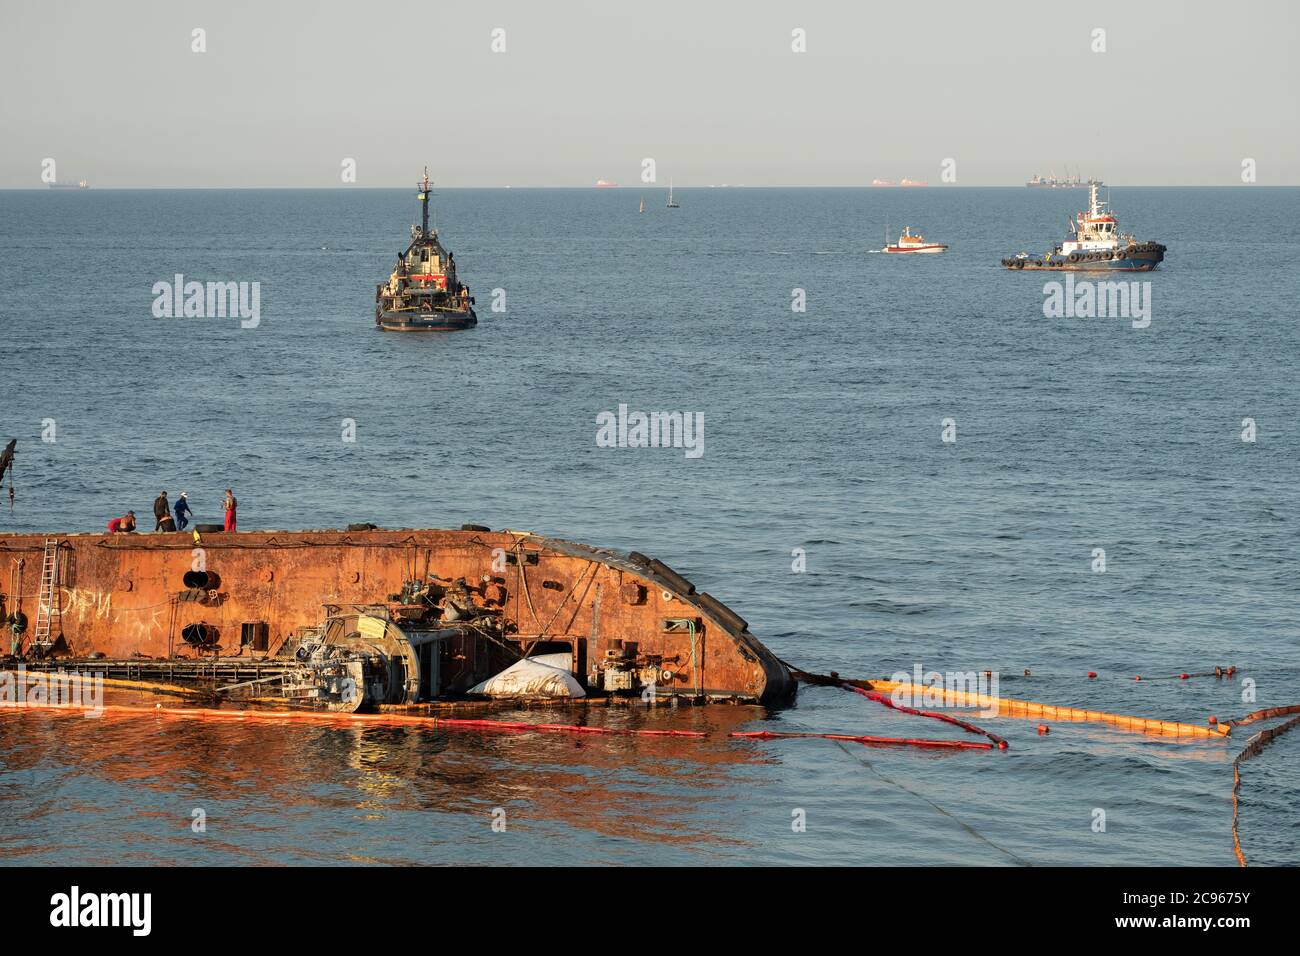 Worker prepare to salvage wrecked ship in Odessa Ukraine. Stock Photo